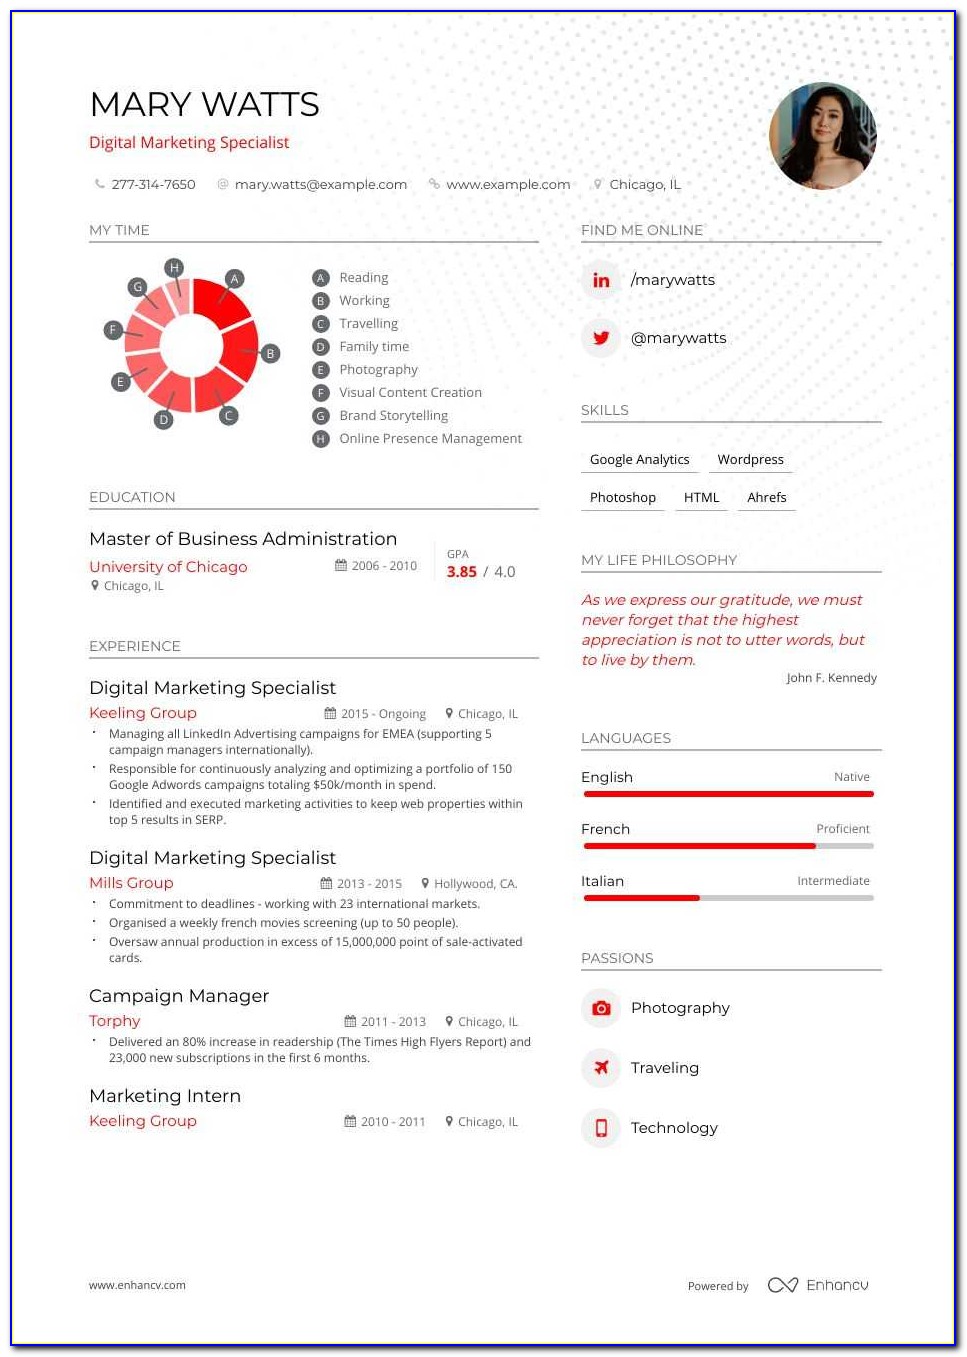 Digital Marketing Experienced Resume Format